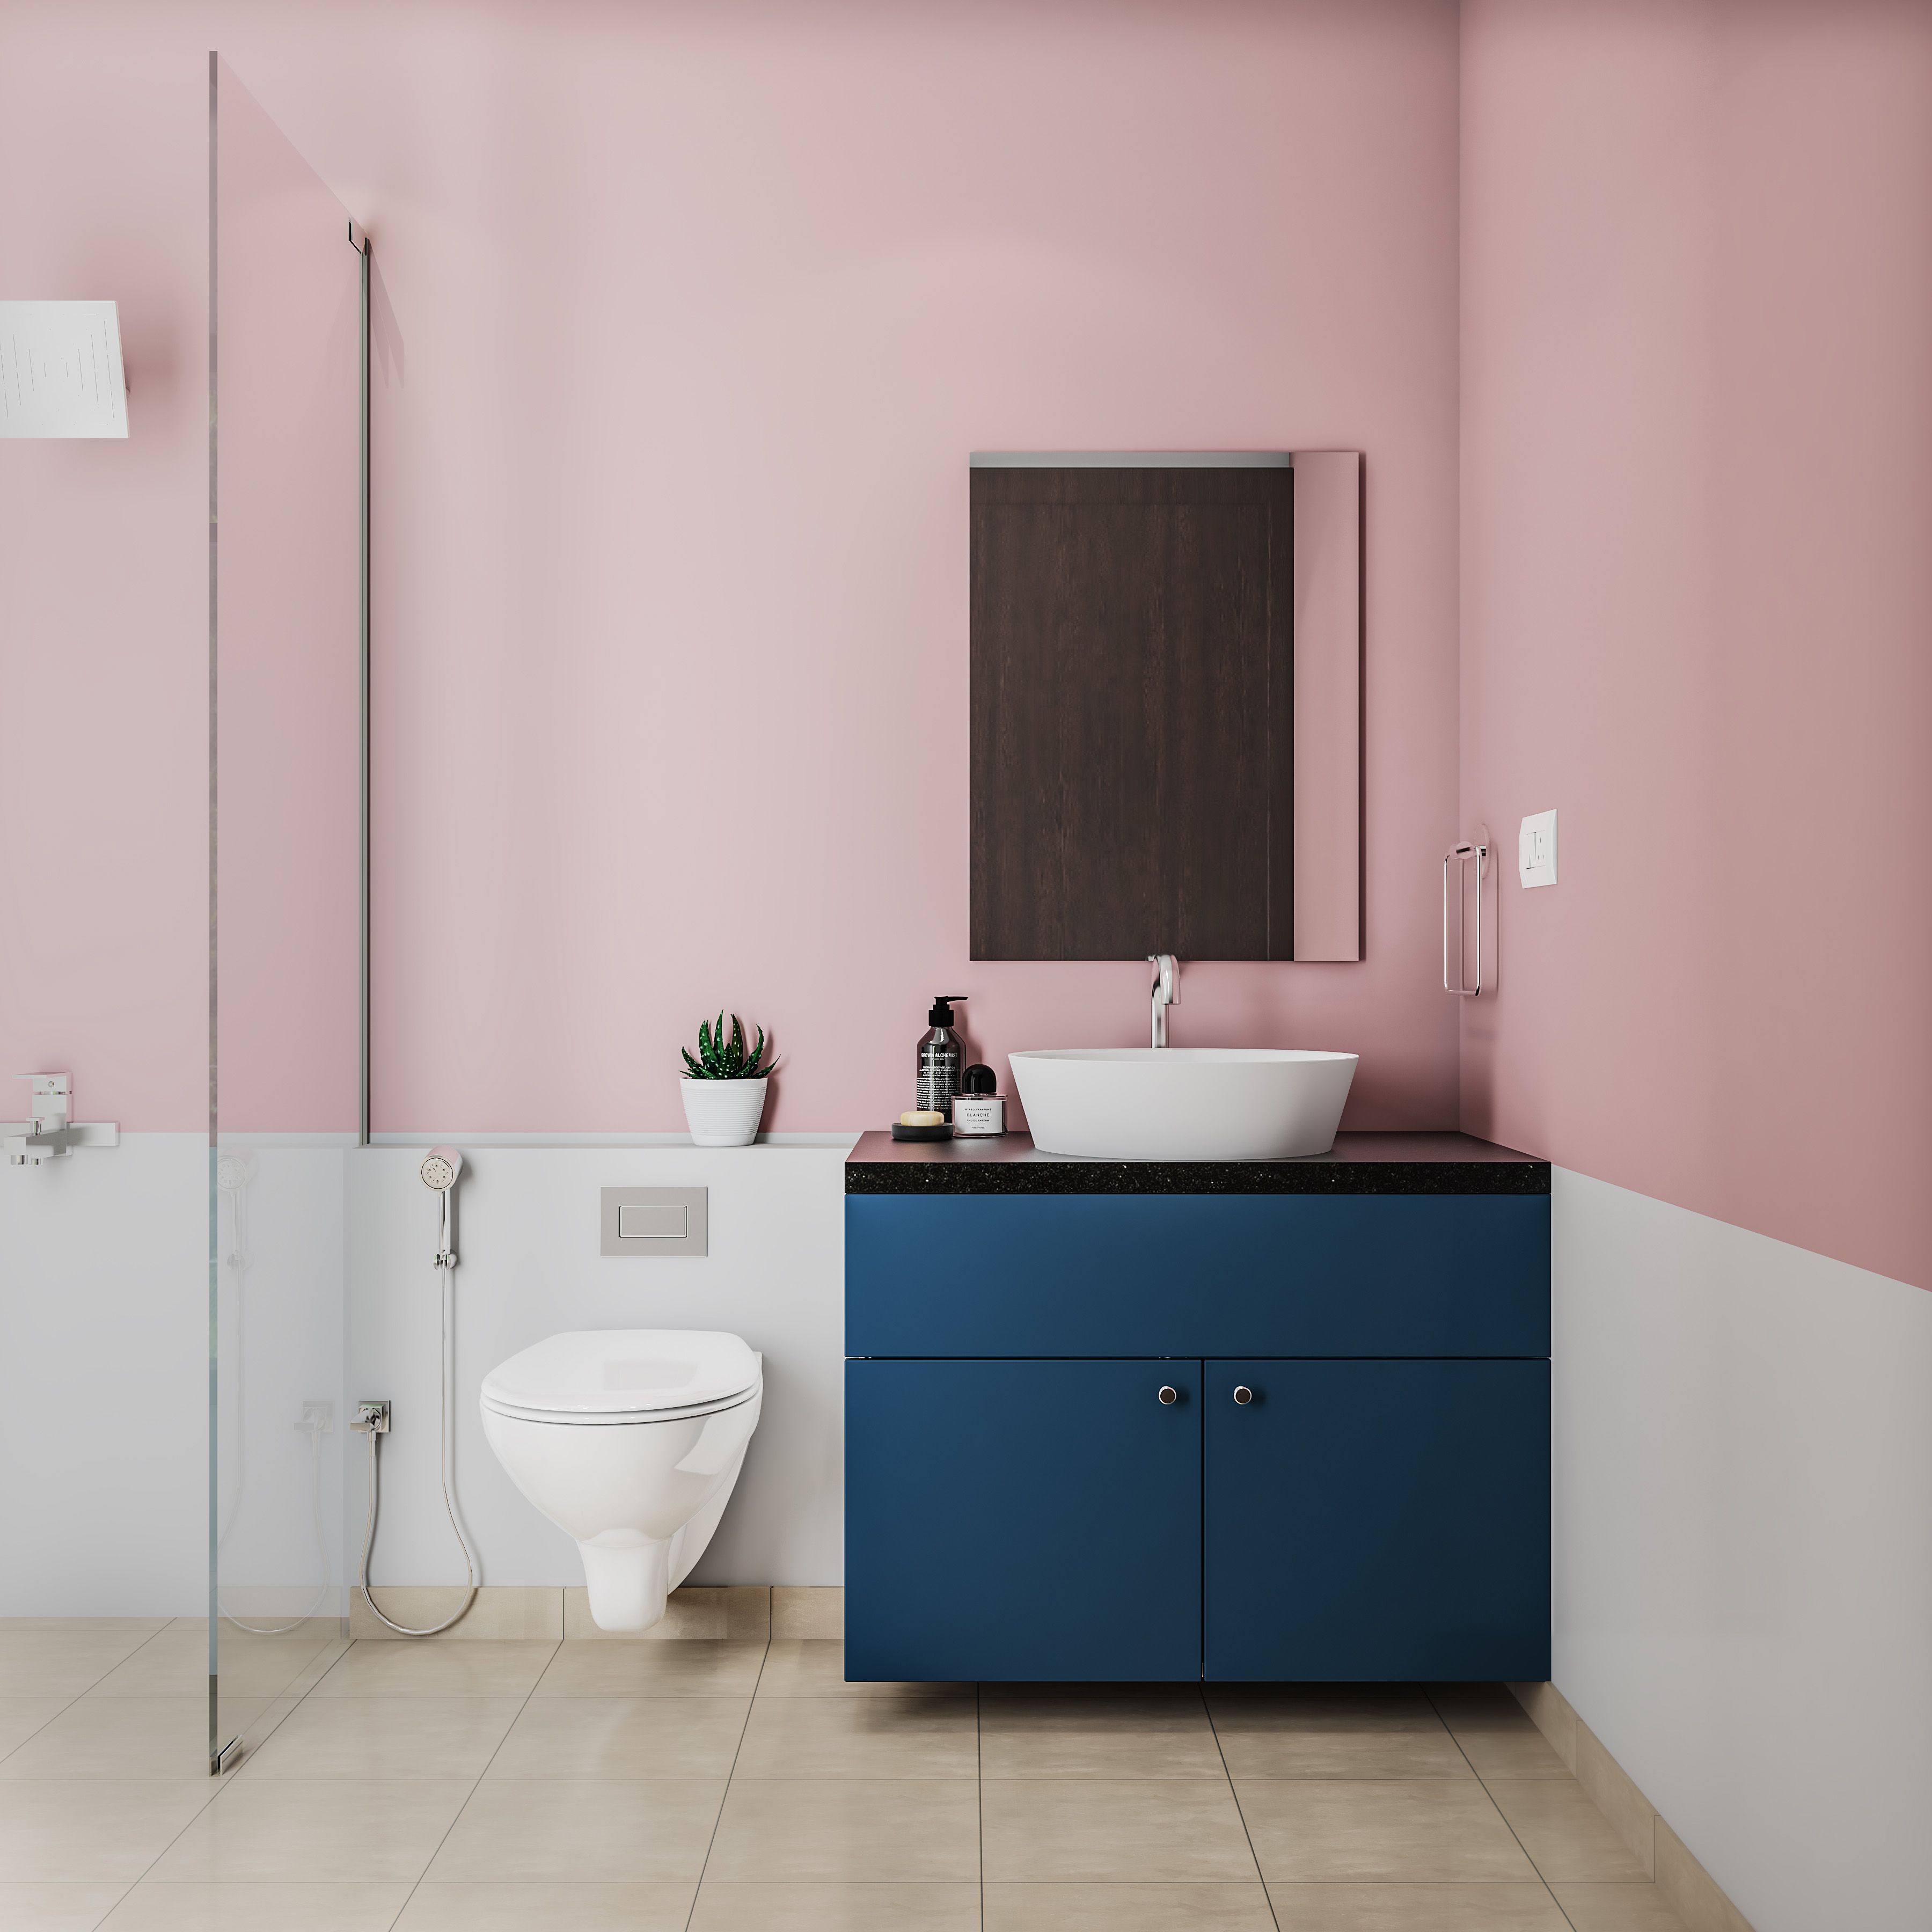 Beige Ceramic Bathroom Tile Design With Matte Finish